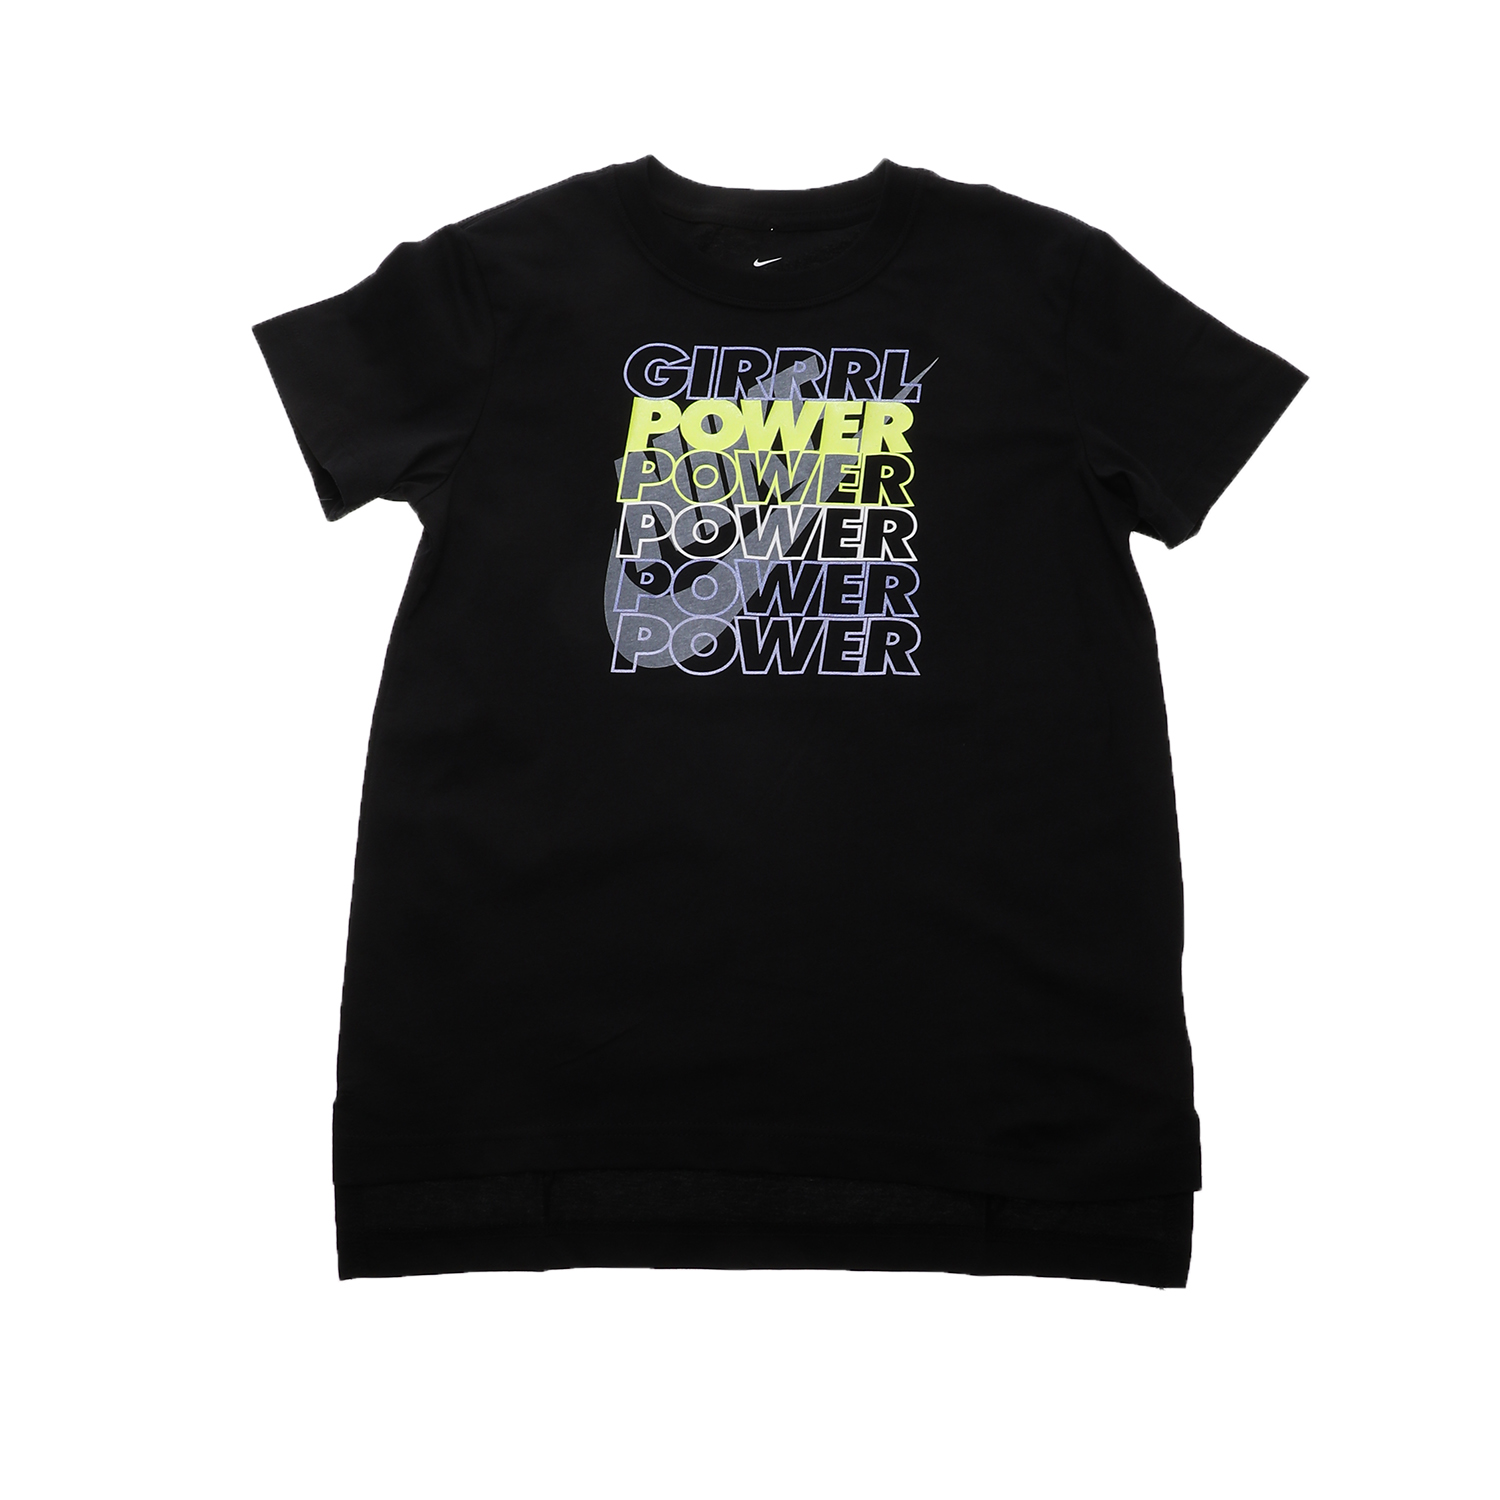 NIKE - Παιδική κοντομάνικη μπλούζα NIKE SW TEE DPTL GIRL POWER μαύρη Παιδικά/Girls/Ρούχα/Αθλητικά